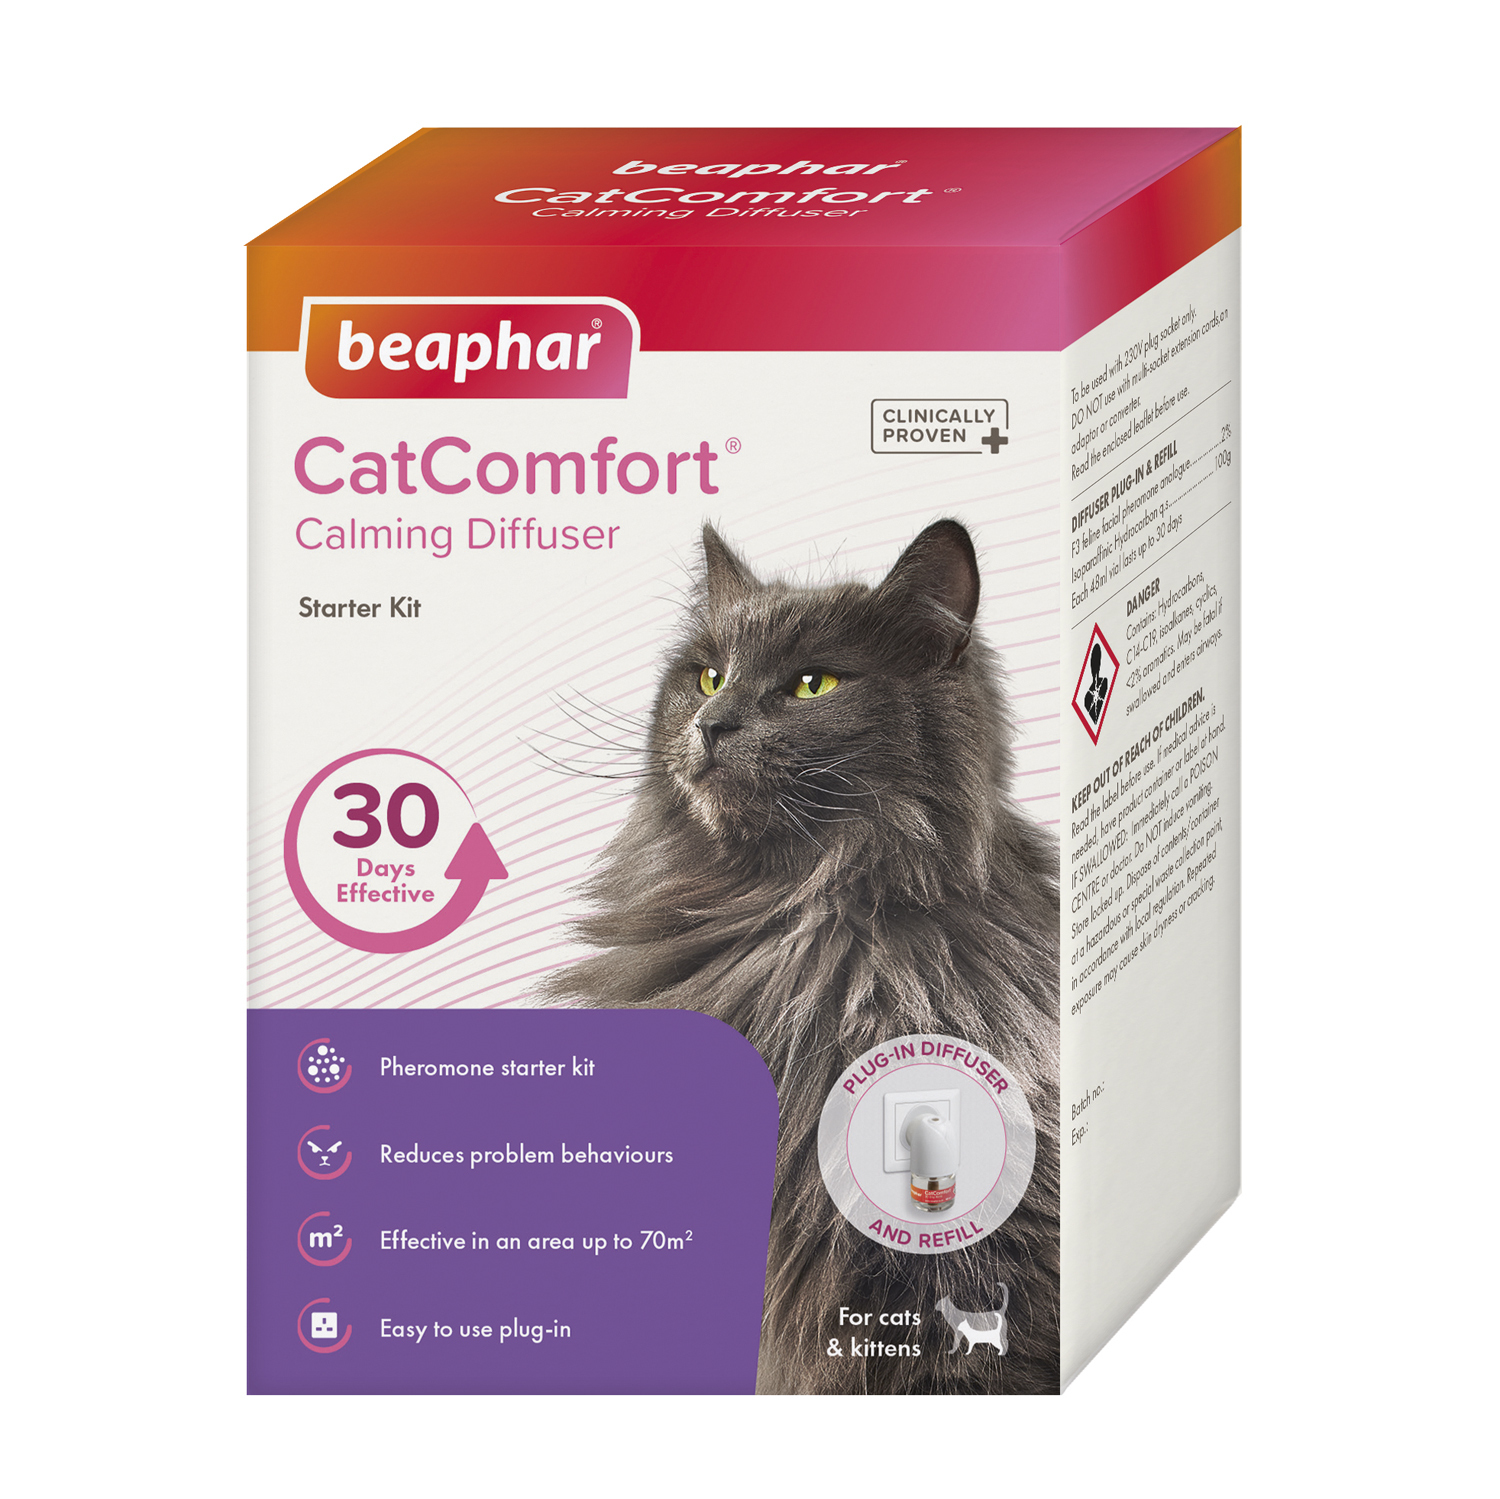 Beaphar Cat Comfort Calming Diffuser Image